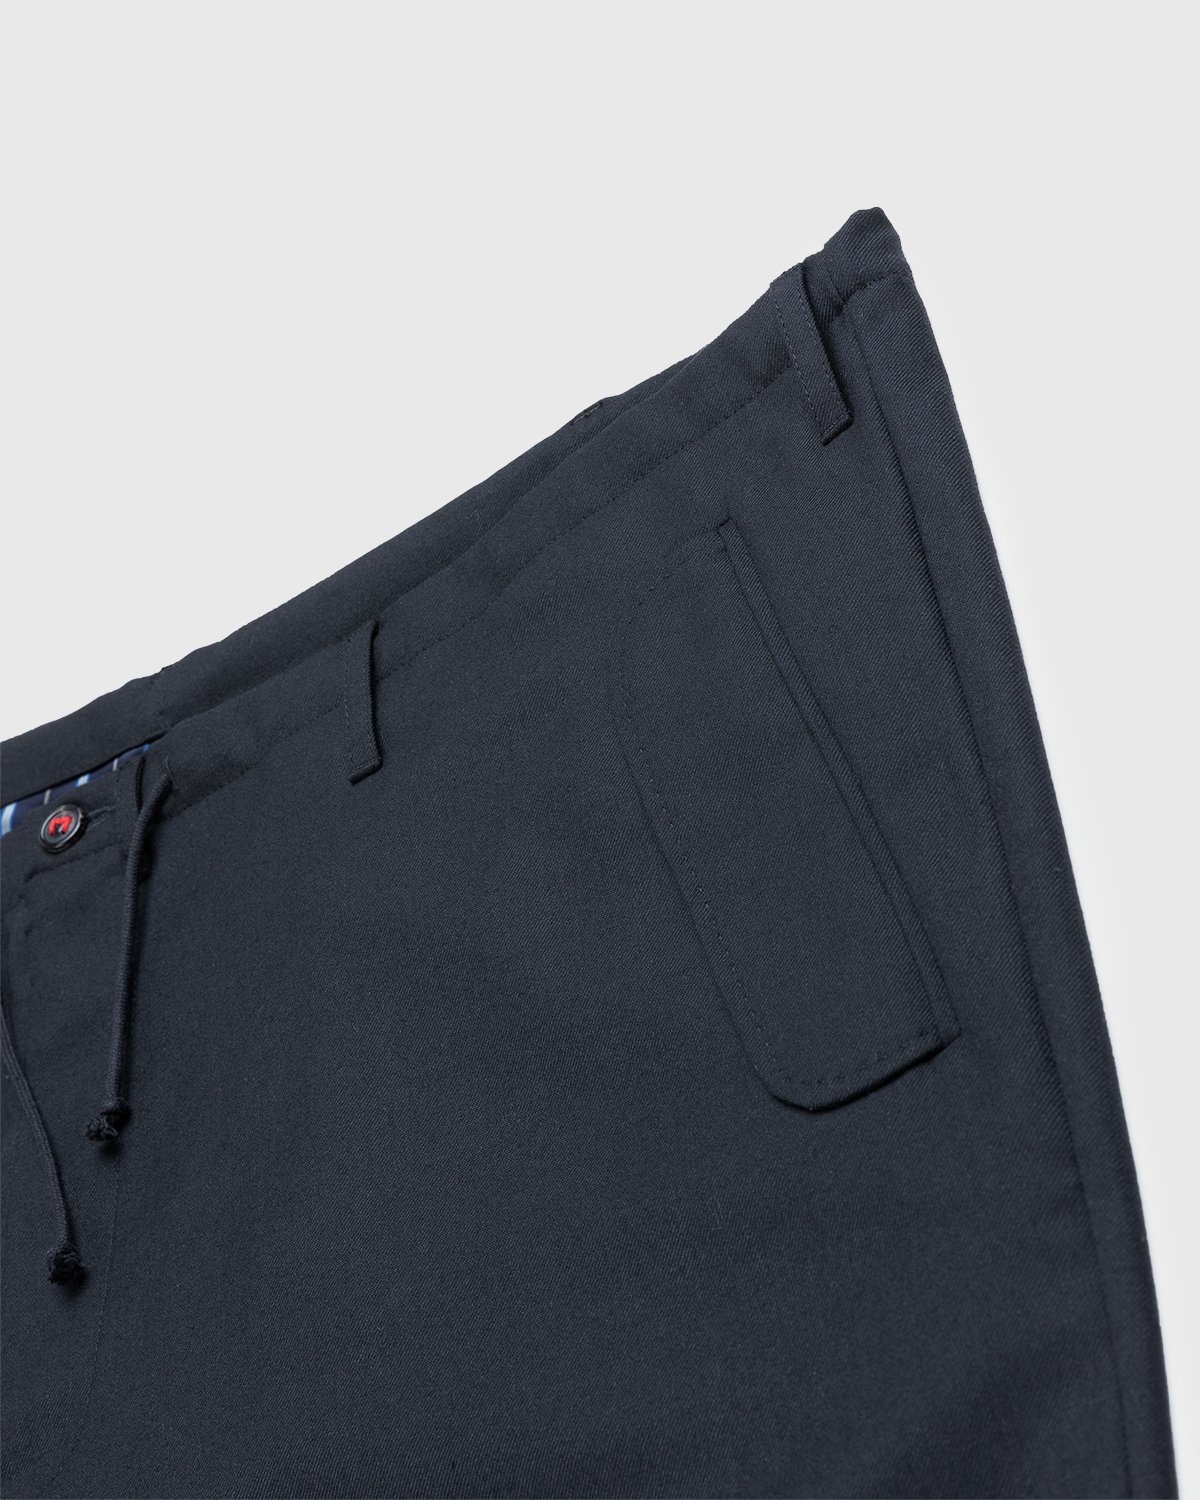 Maison Margiela – Drawstring Leg Trousers Black - Pants - Black - Image 5